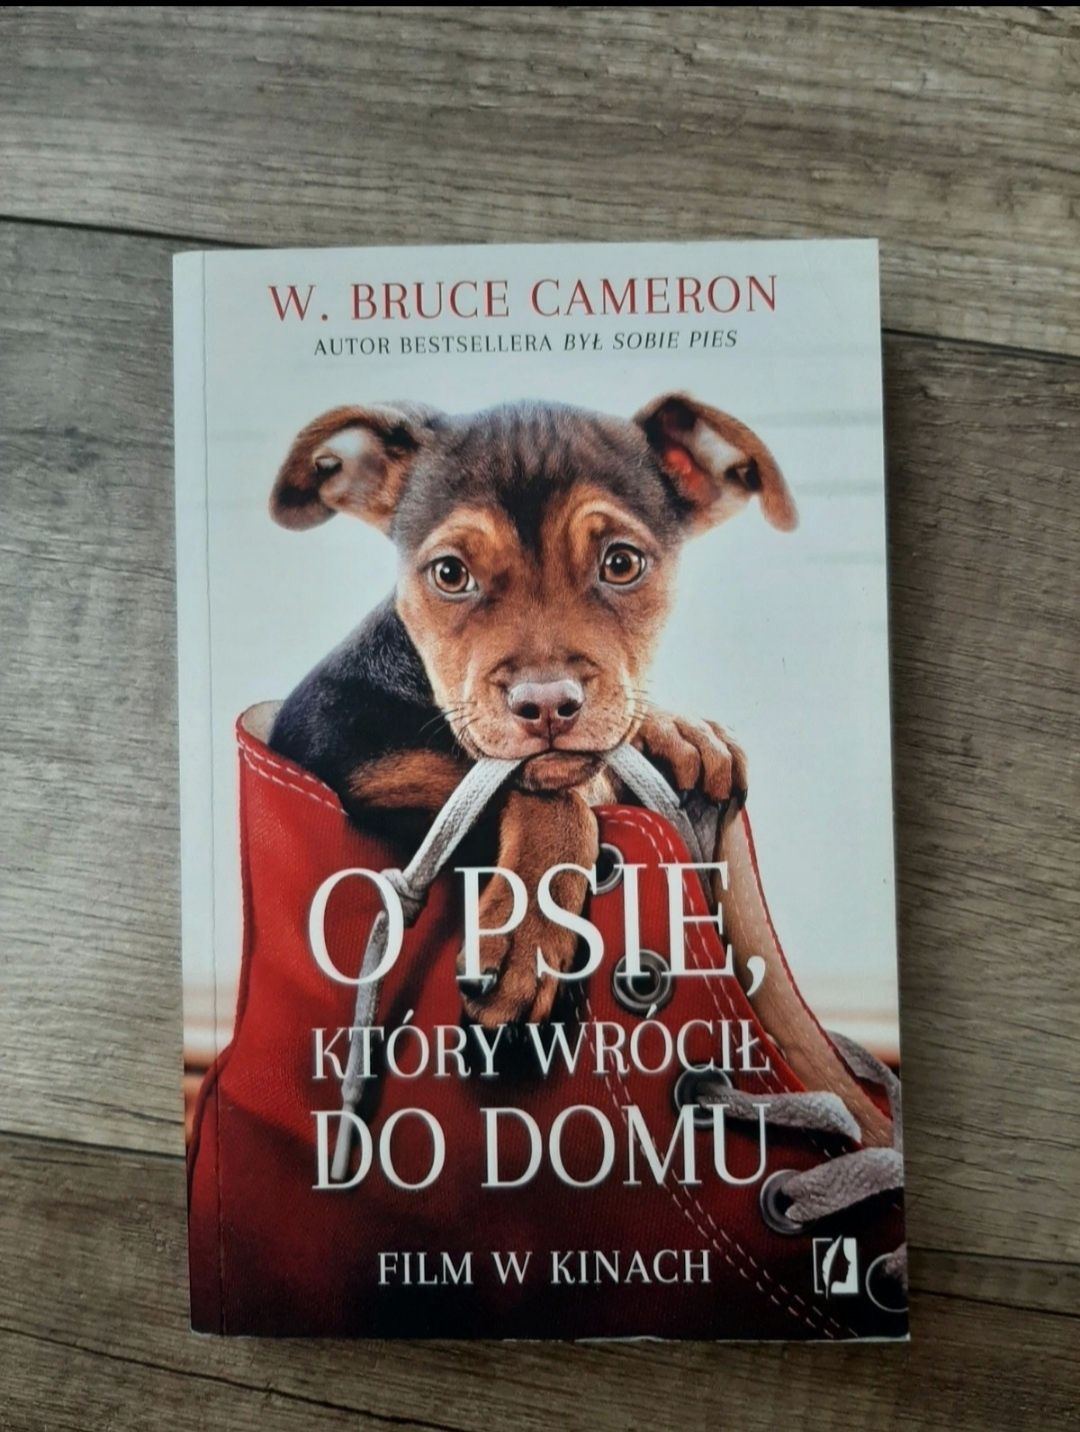 W. Bruce Cameron "O psie, który wrócił do domu"